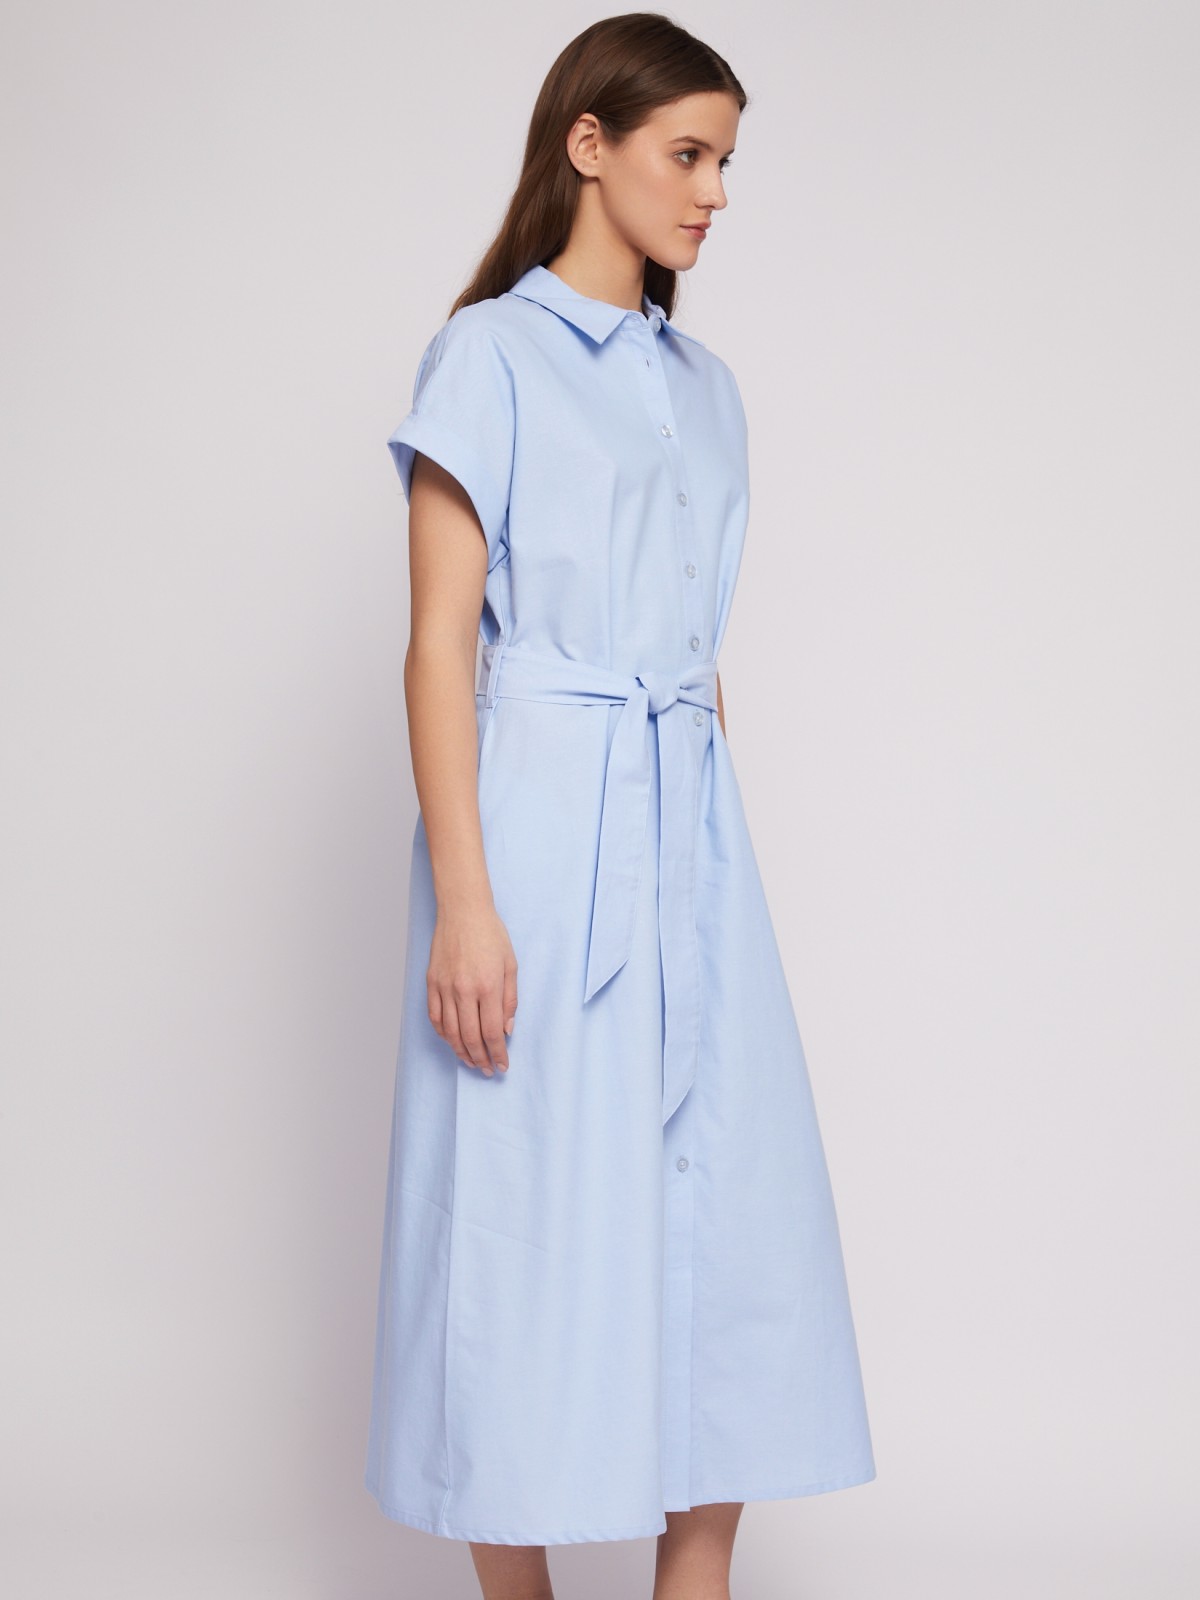 Платье-рубашка из хлопка с коротким рукавом и поясом zolla 024218262353, цвет светло-голубой, размер XS - фото 3